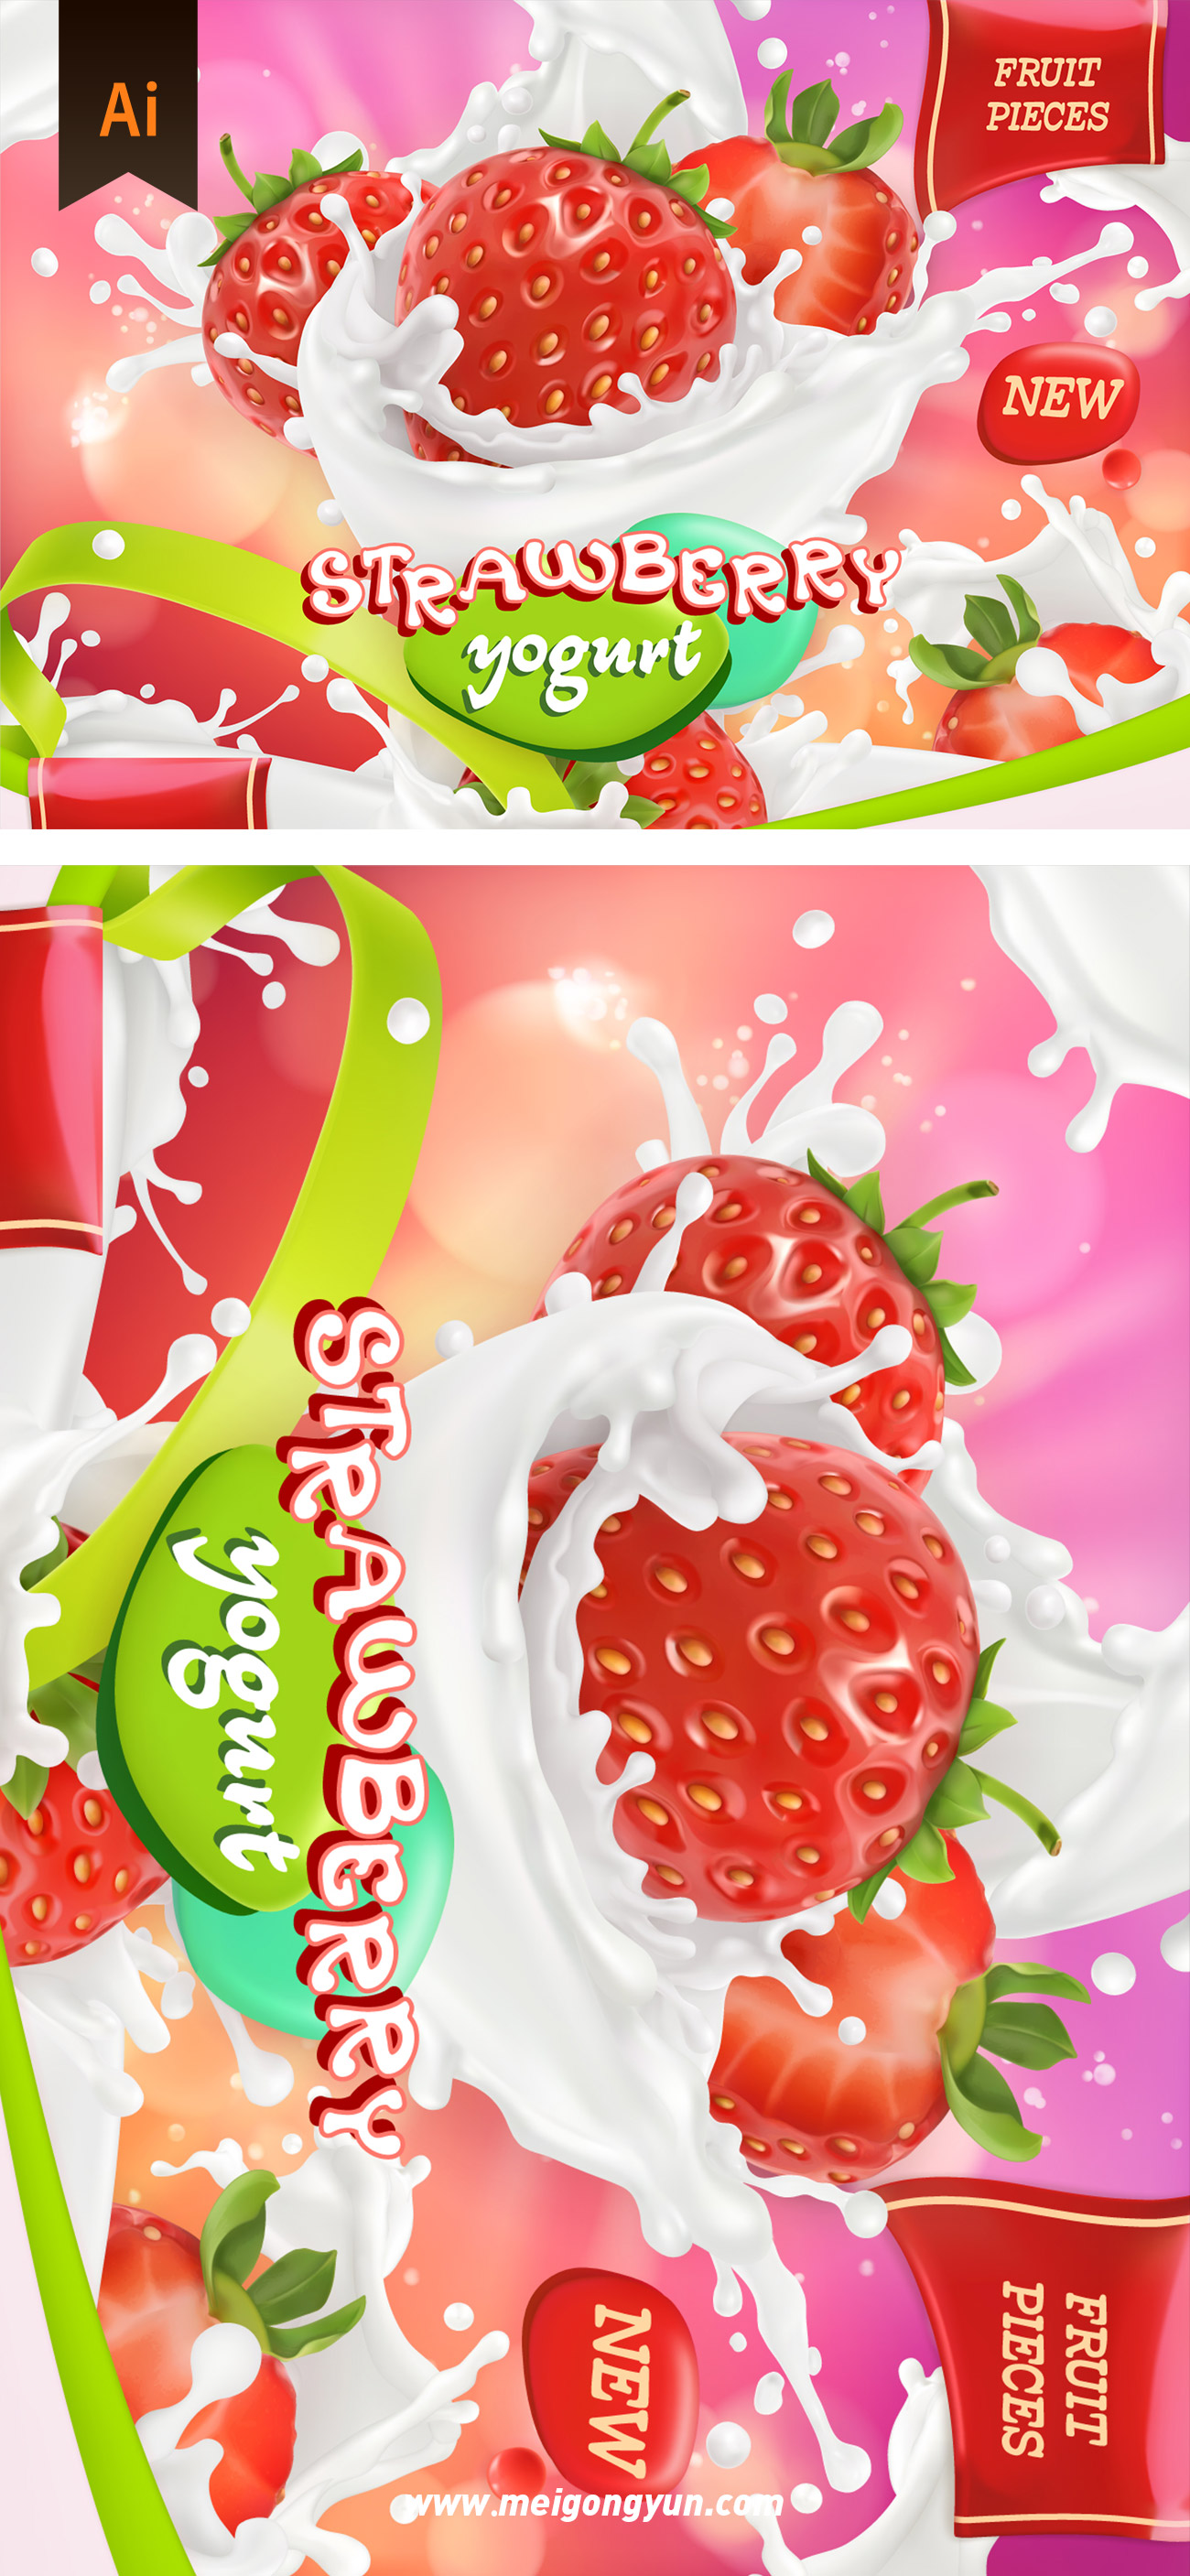 Strawberry Yogurt 牛奶中的草莓蓝莓矢量素材